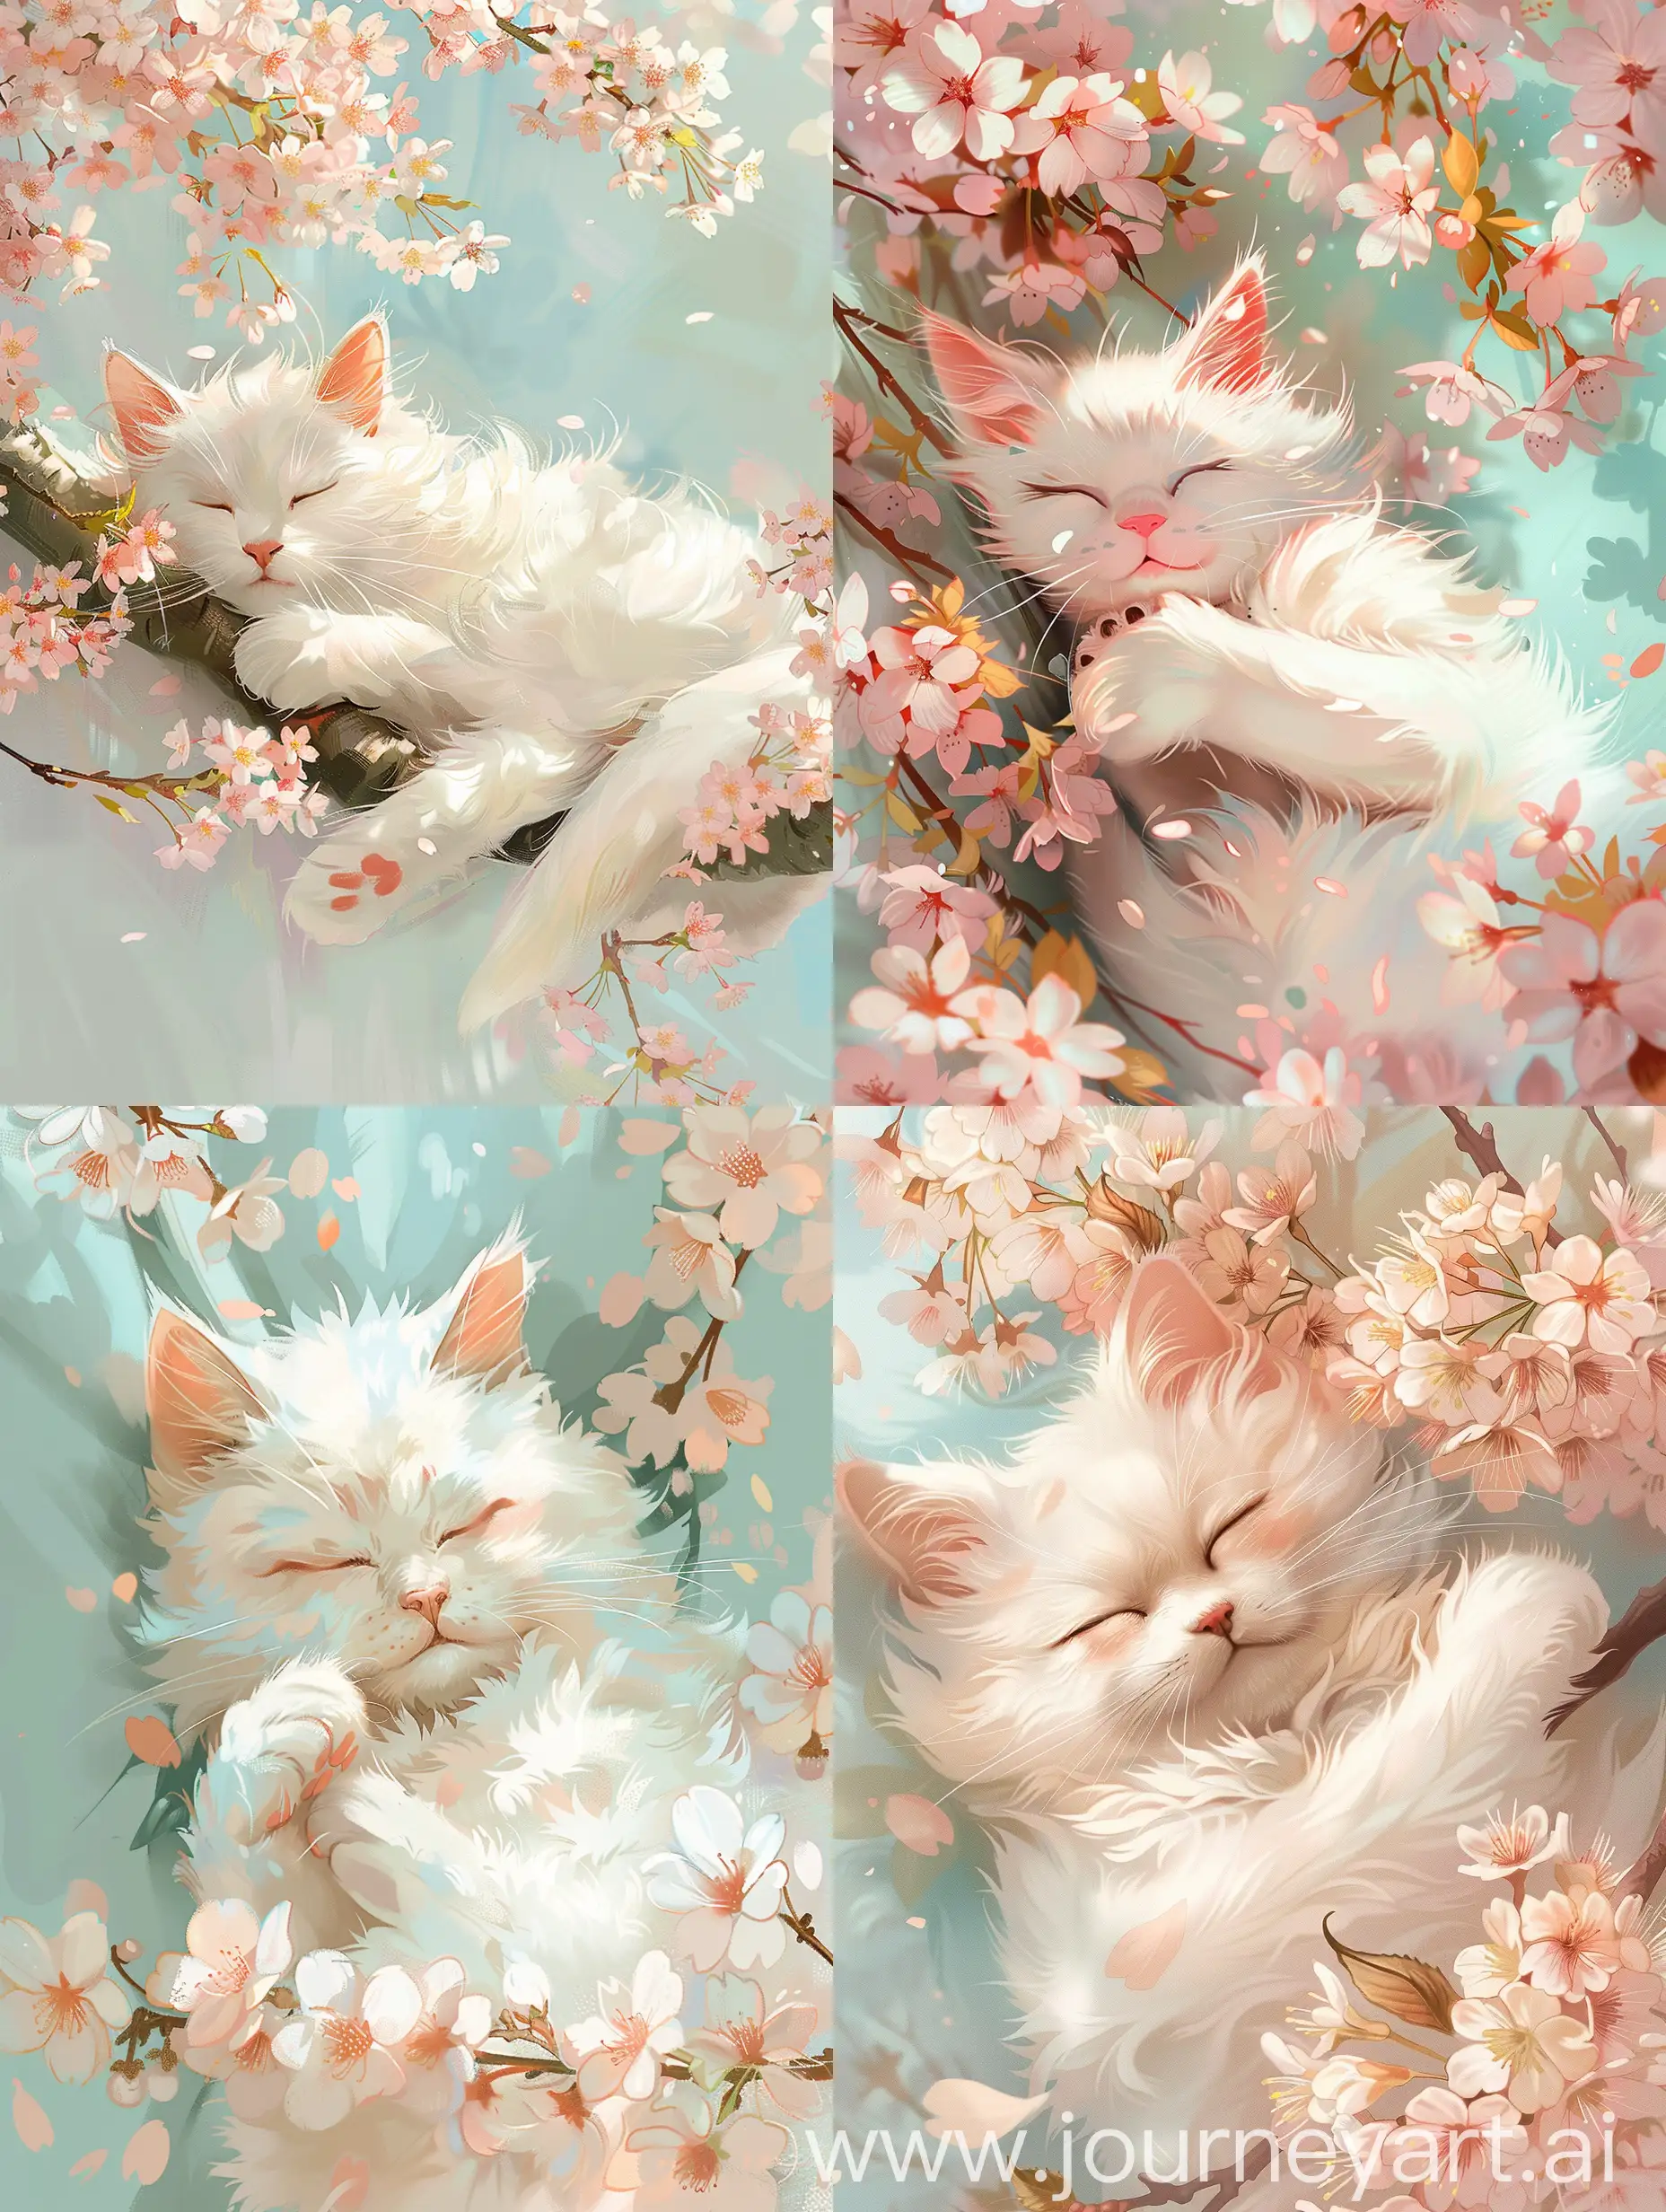 Peaceful-White-Kitty-Sleeping-in-Sakura-Blossoms